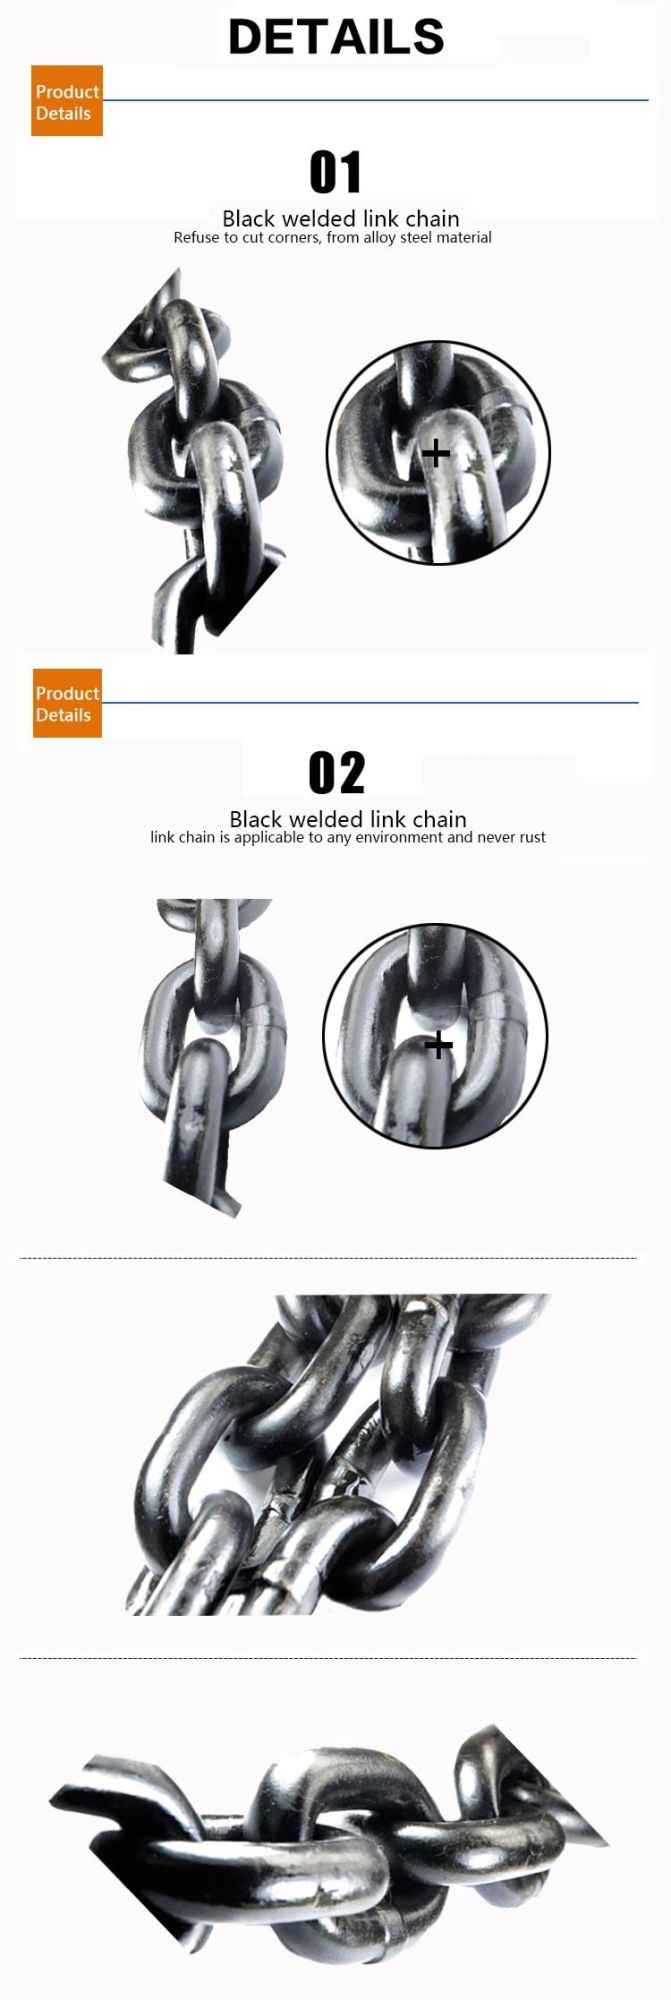 G70 Black Oxidised/Painted/Plastic Powder Coated Lifting Chain